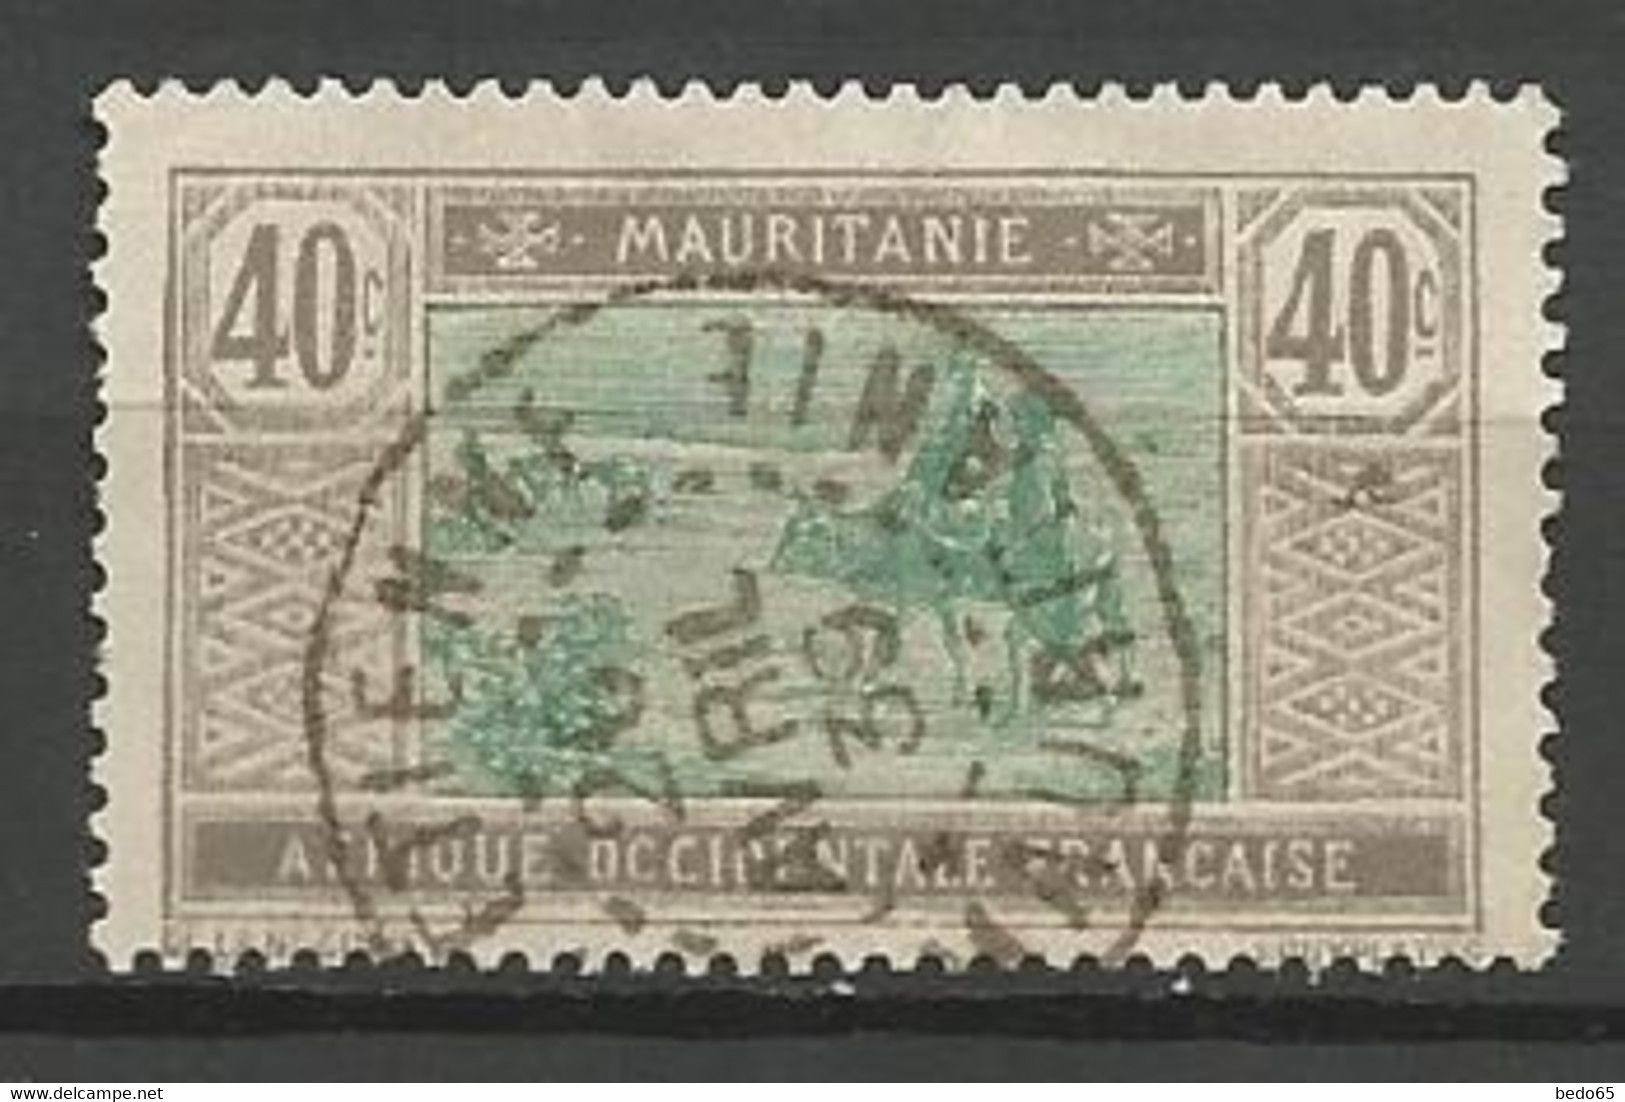 MAURITANIE N° 27 CACHET PORT-ETIENNE - Used Stamps